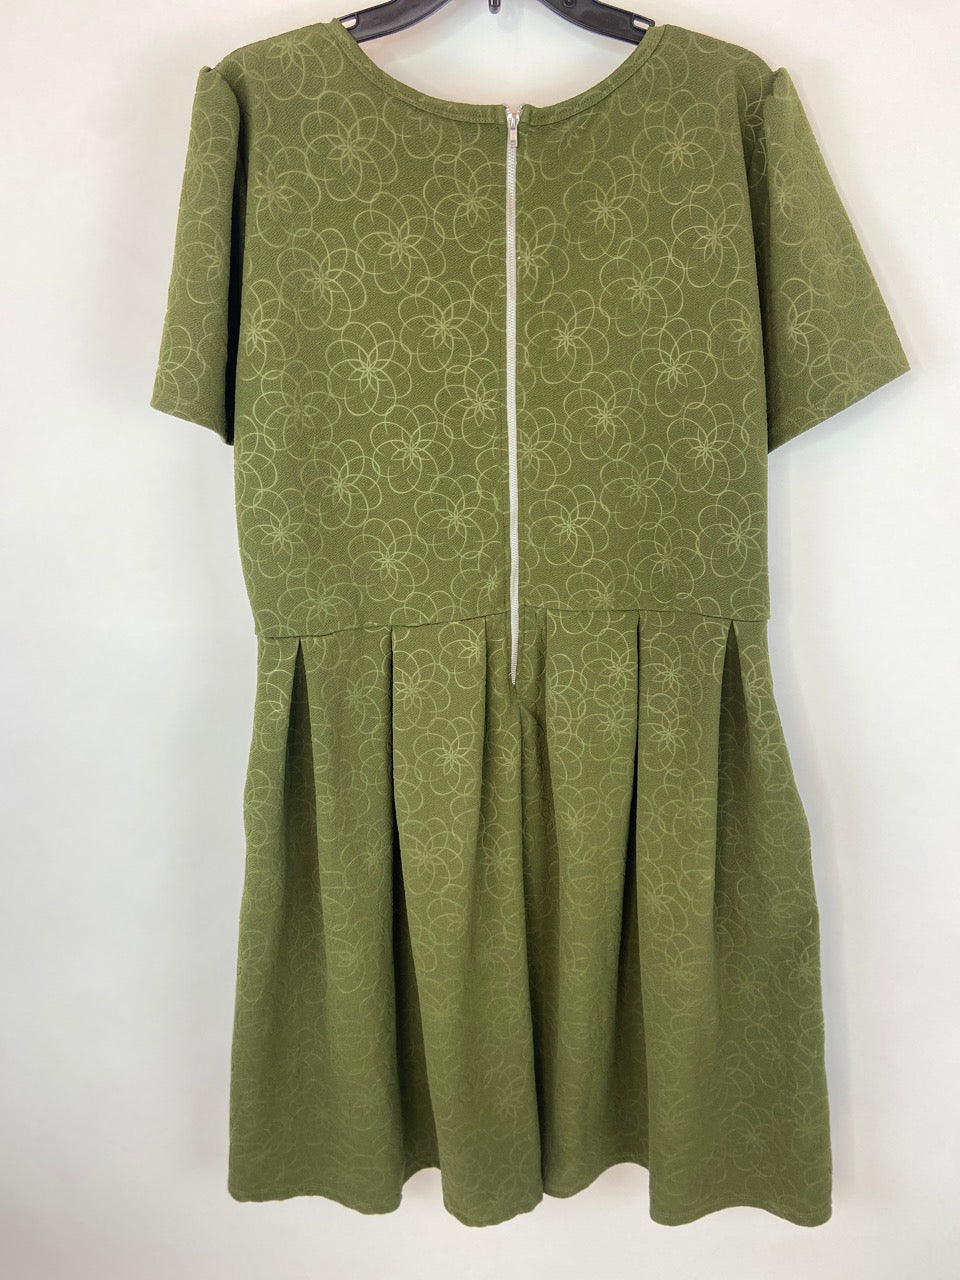 LuLaRoe Olive A-line Dress- 3XL